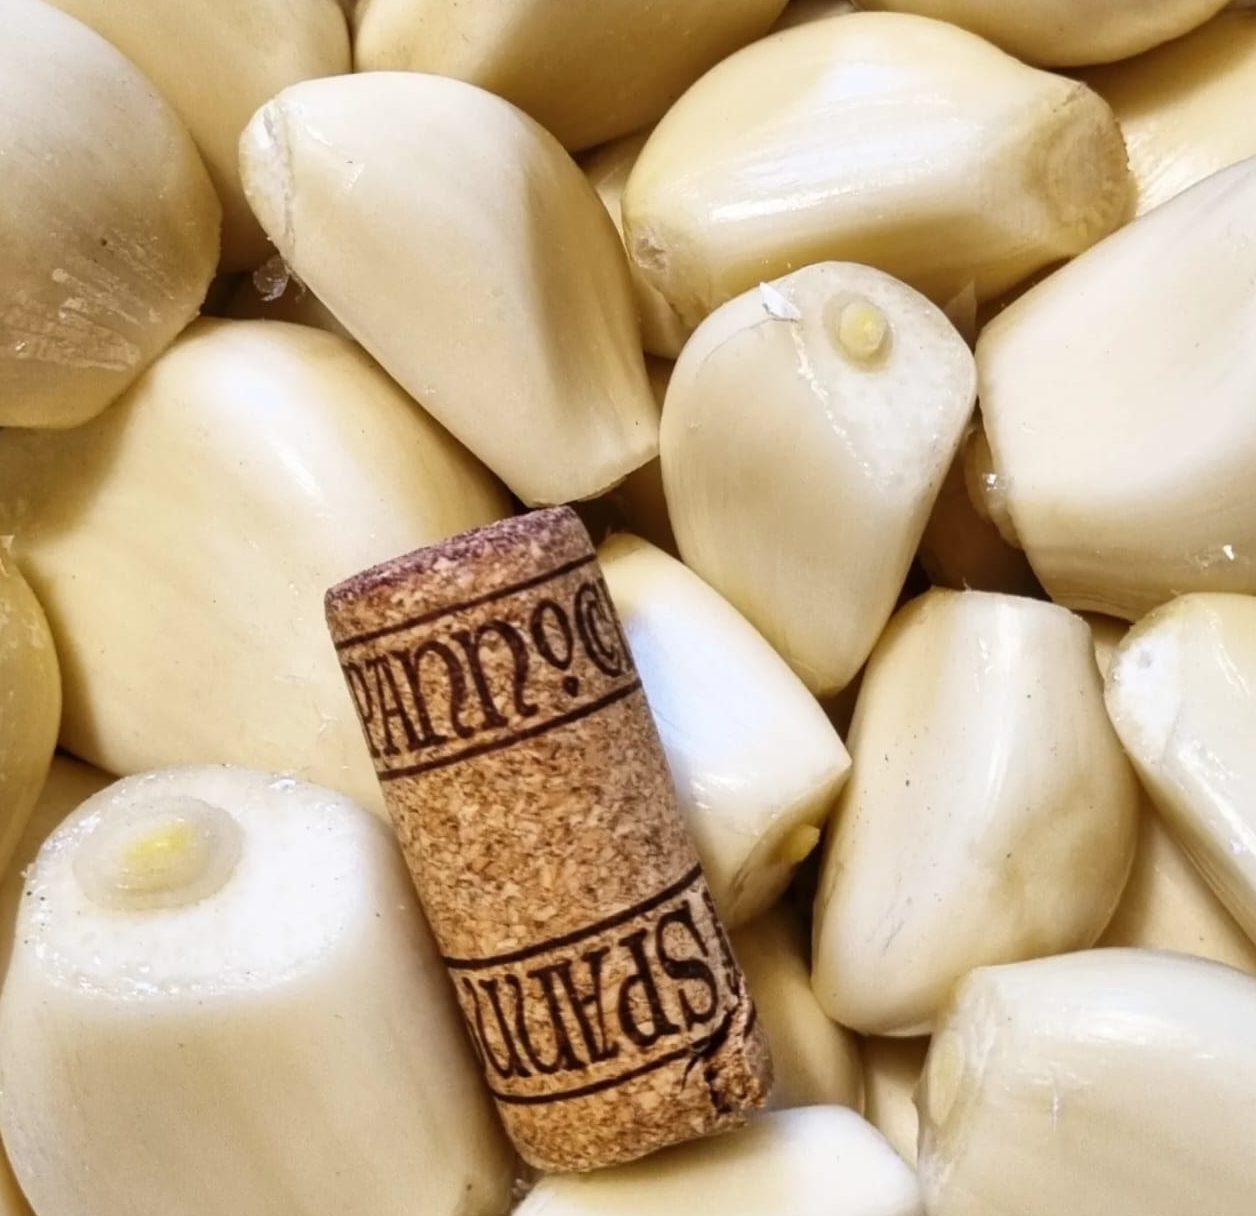 Aglione (Elephant Garlic) with wine cork for scale